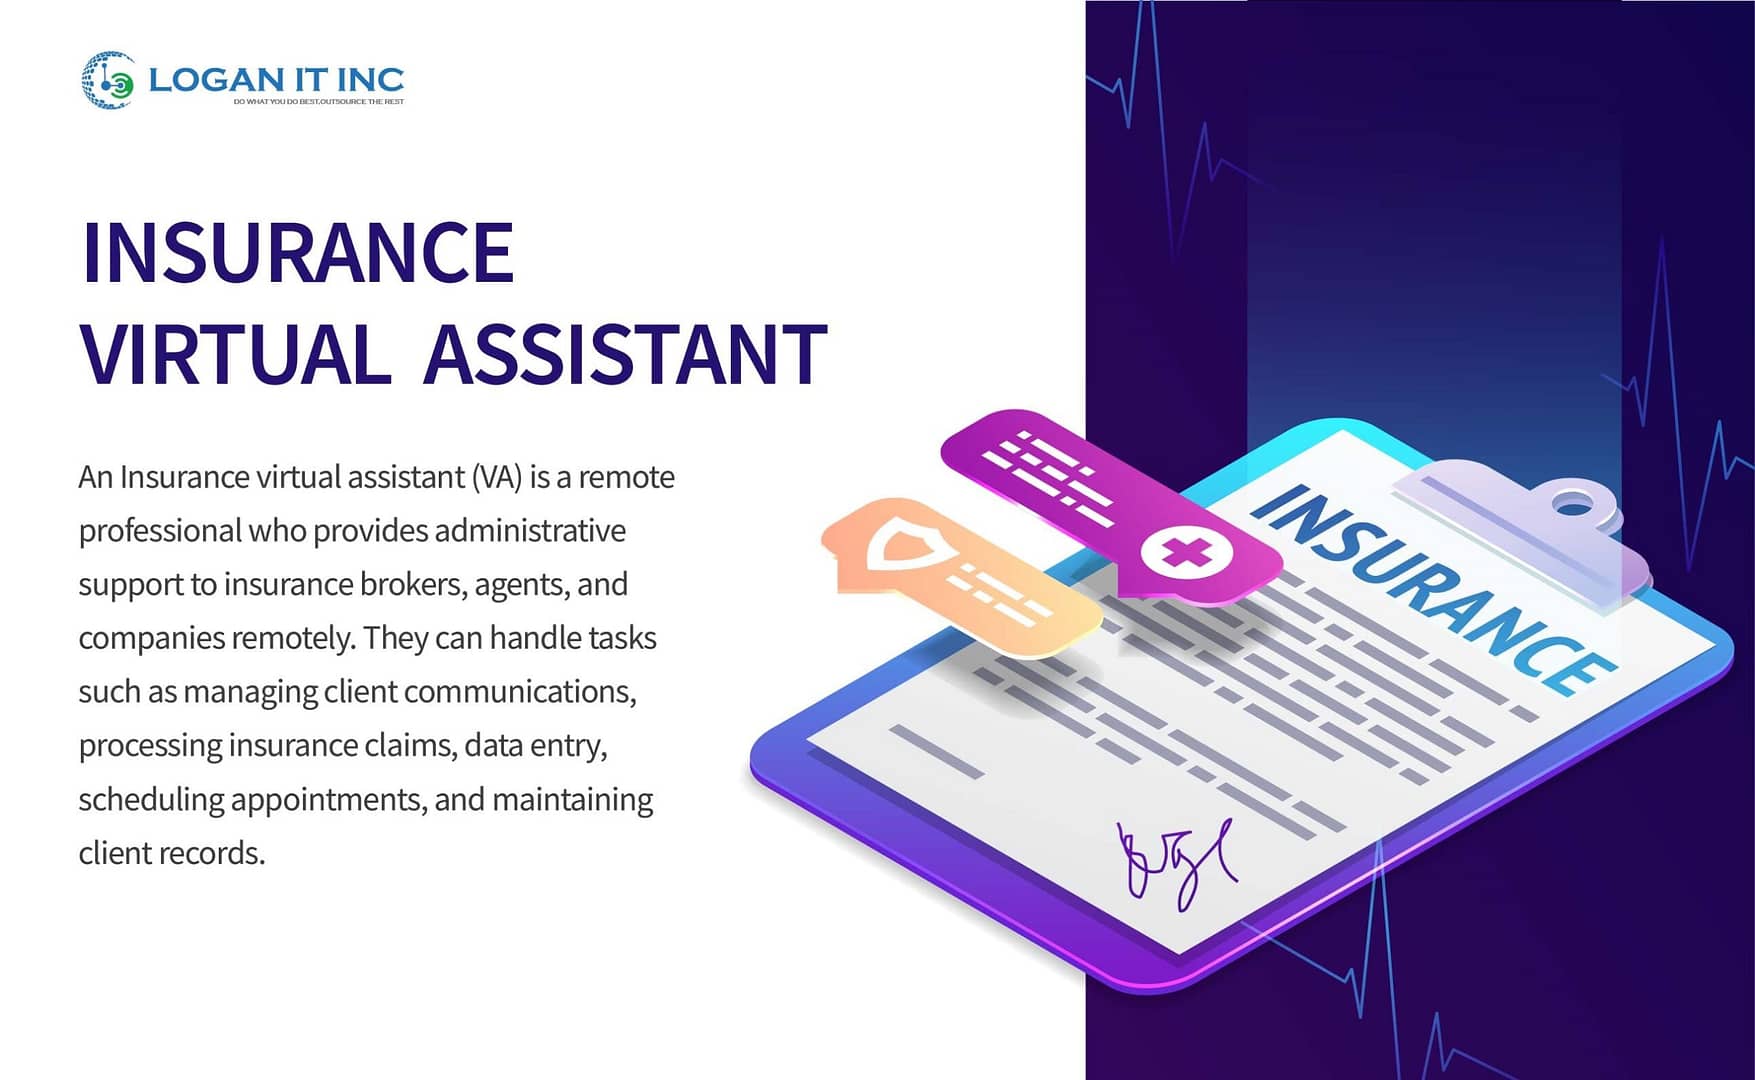 Insurance Virtual assistant | Virtual assistant Insurance | Insurance agency Virtual assistant | Logan IT Inc